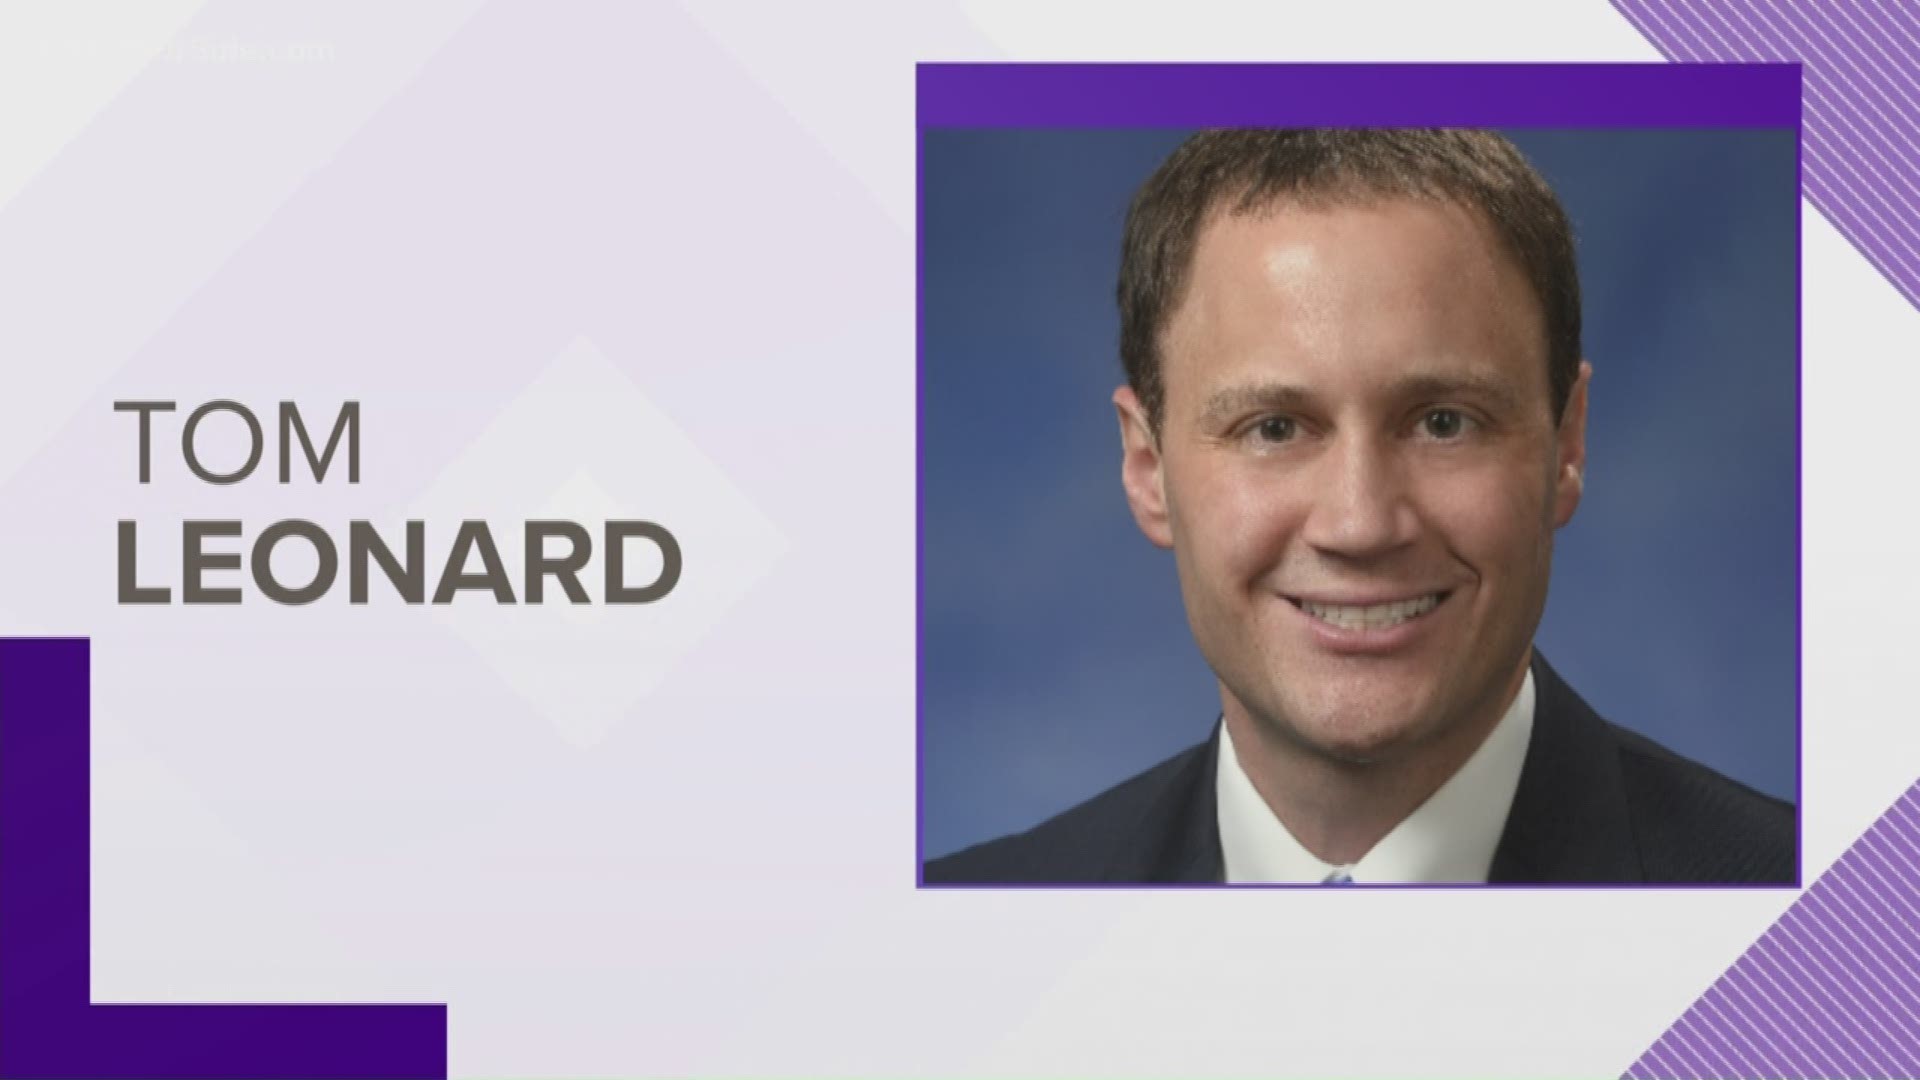 Leonard unsuccessfully ran to be Michigan's next Attorney General in 2018, losing to Dana Nessel.